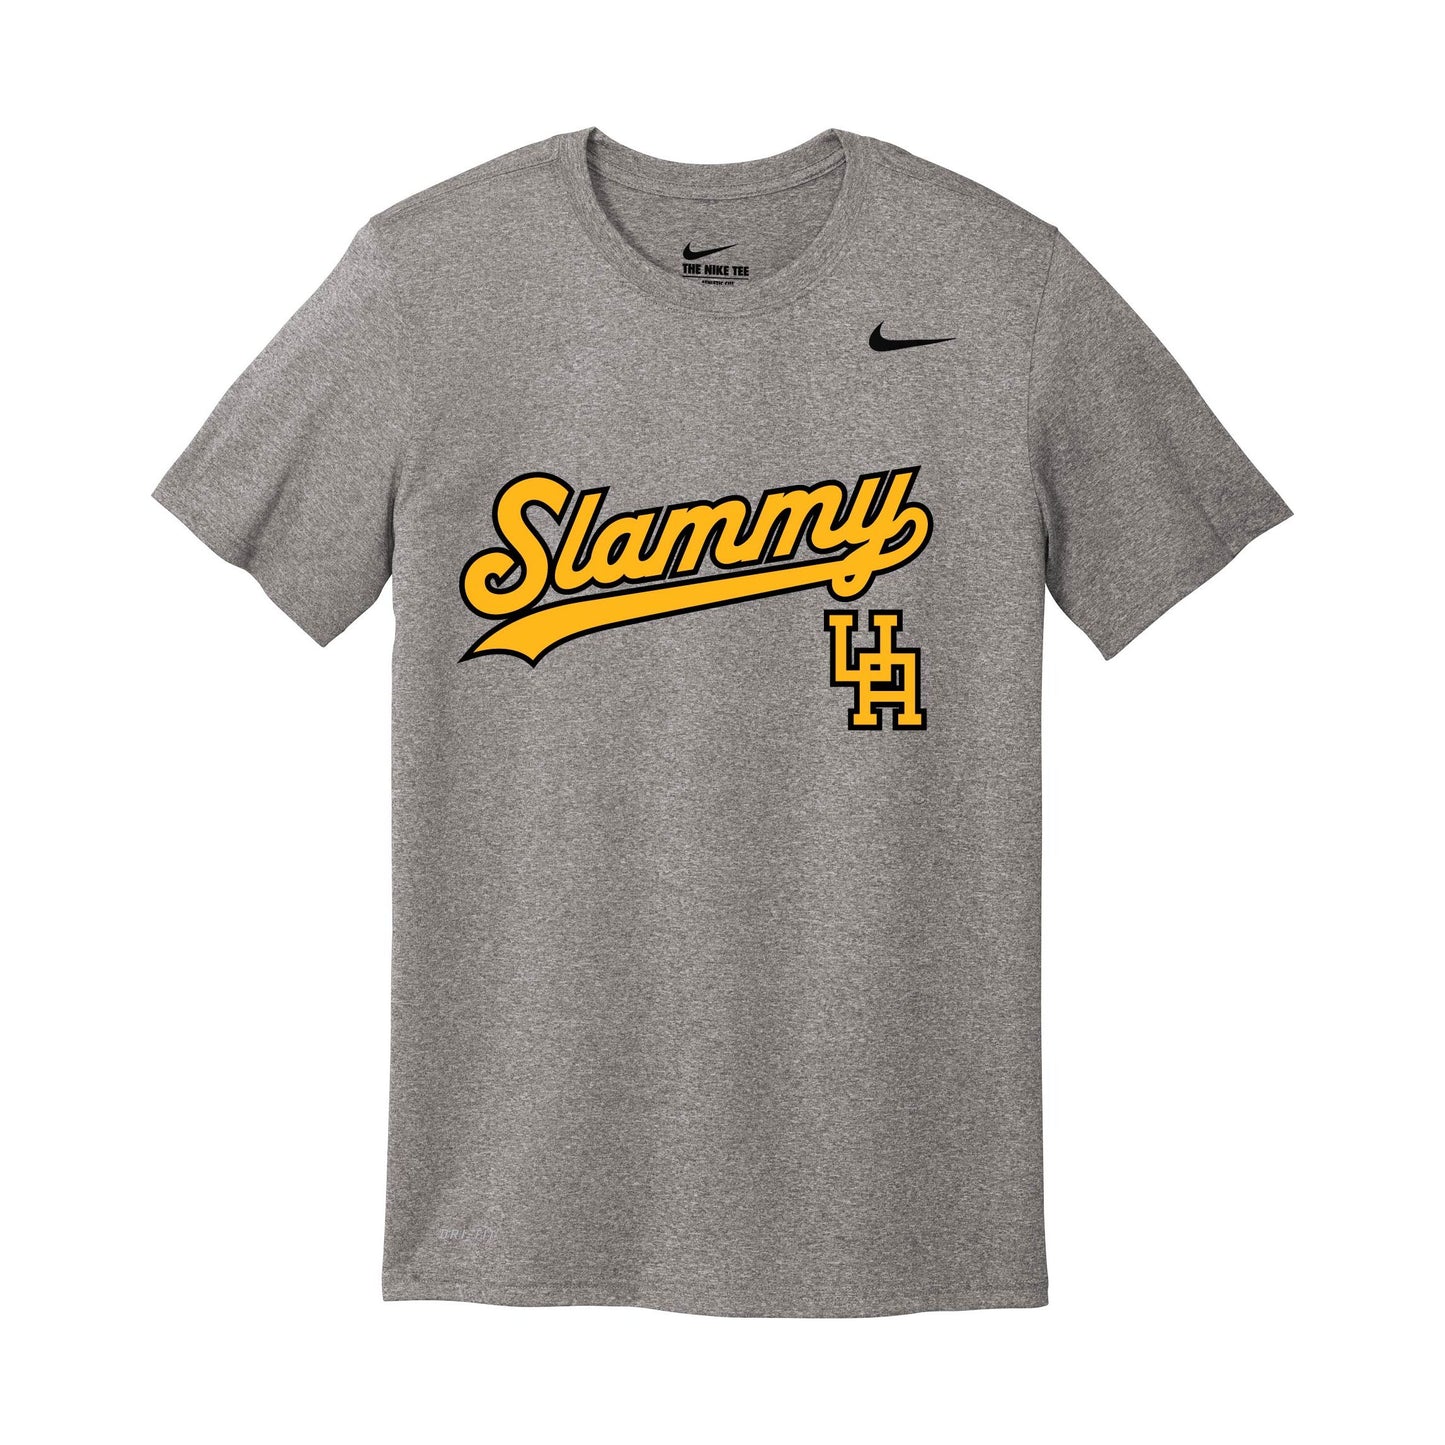 Slammy's Nike Adult Tee